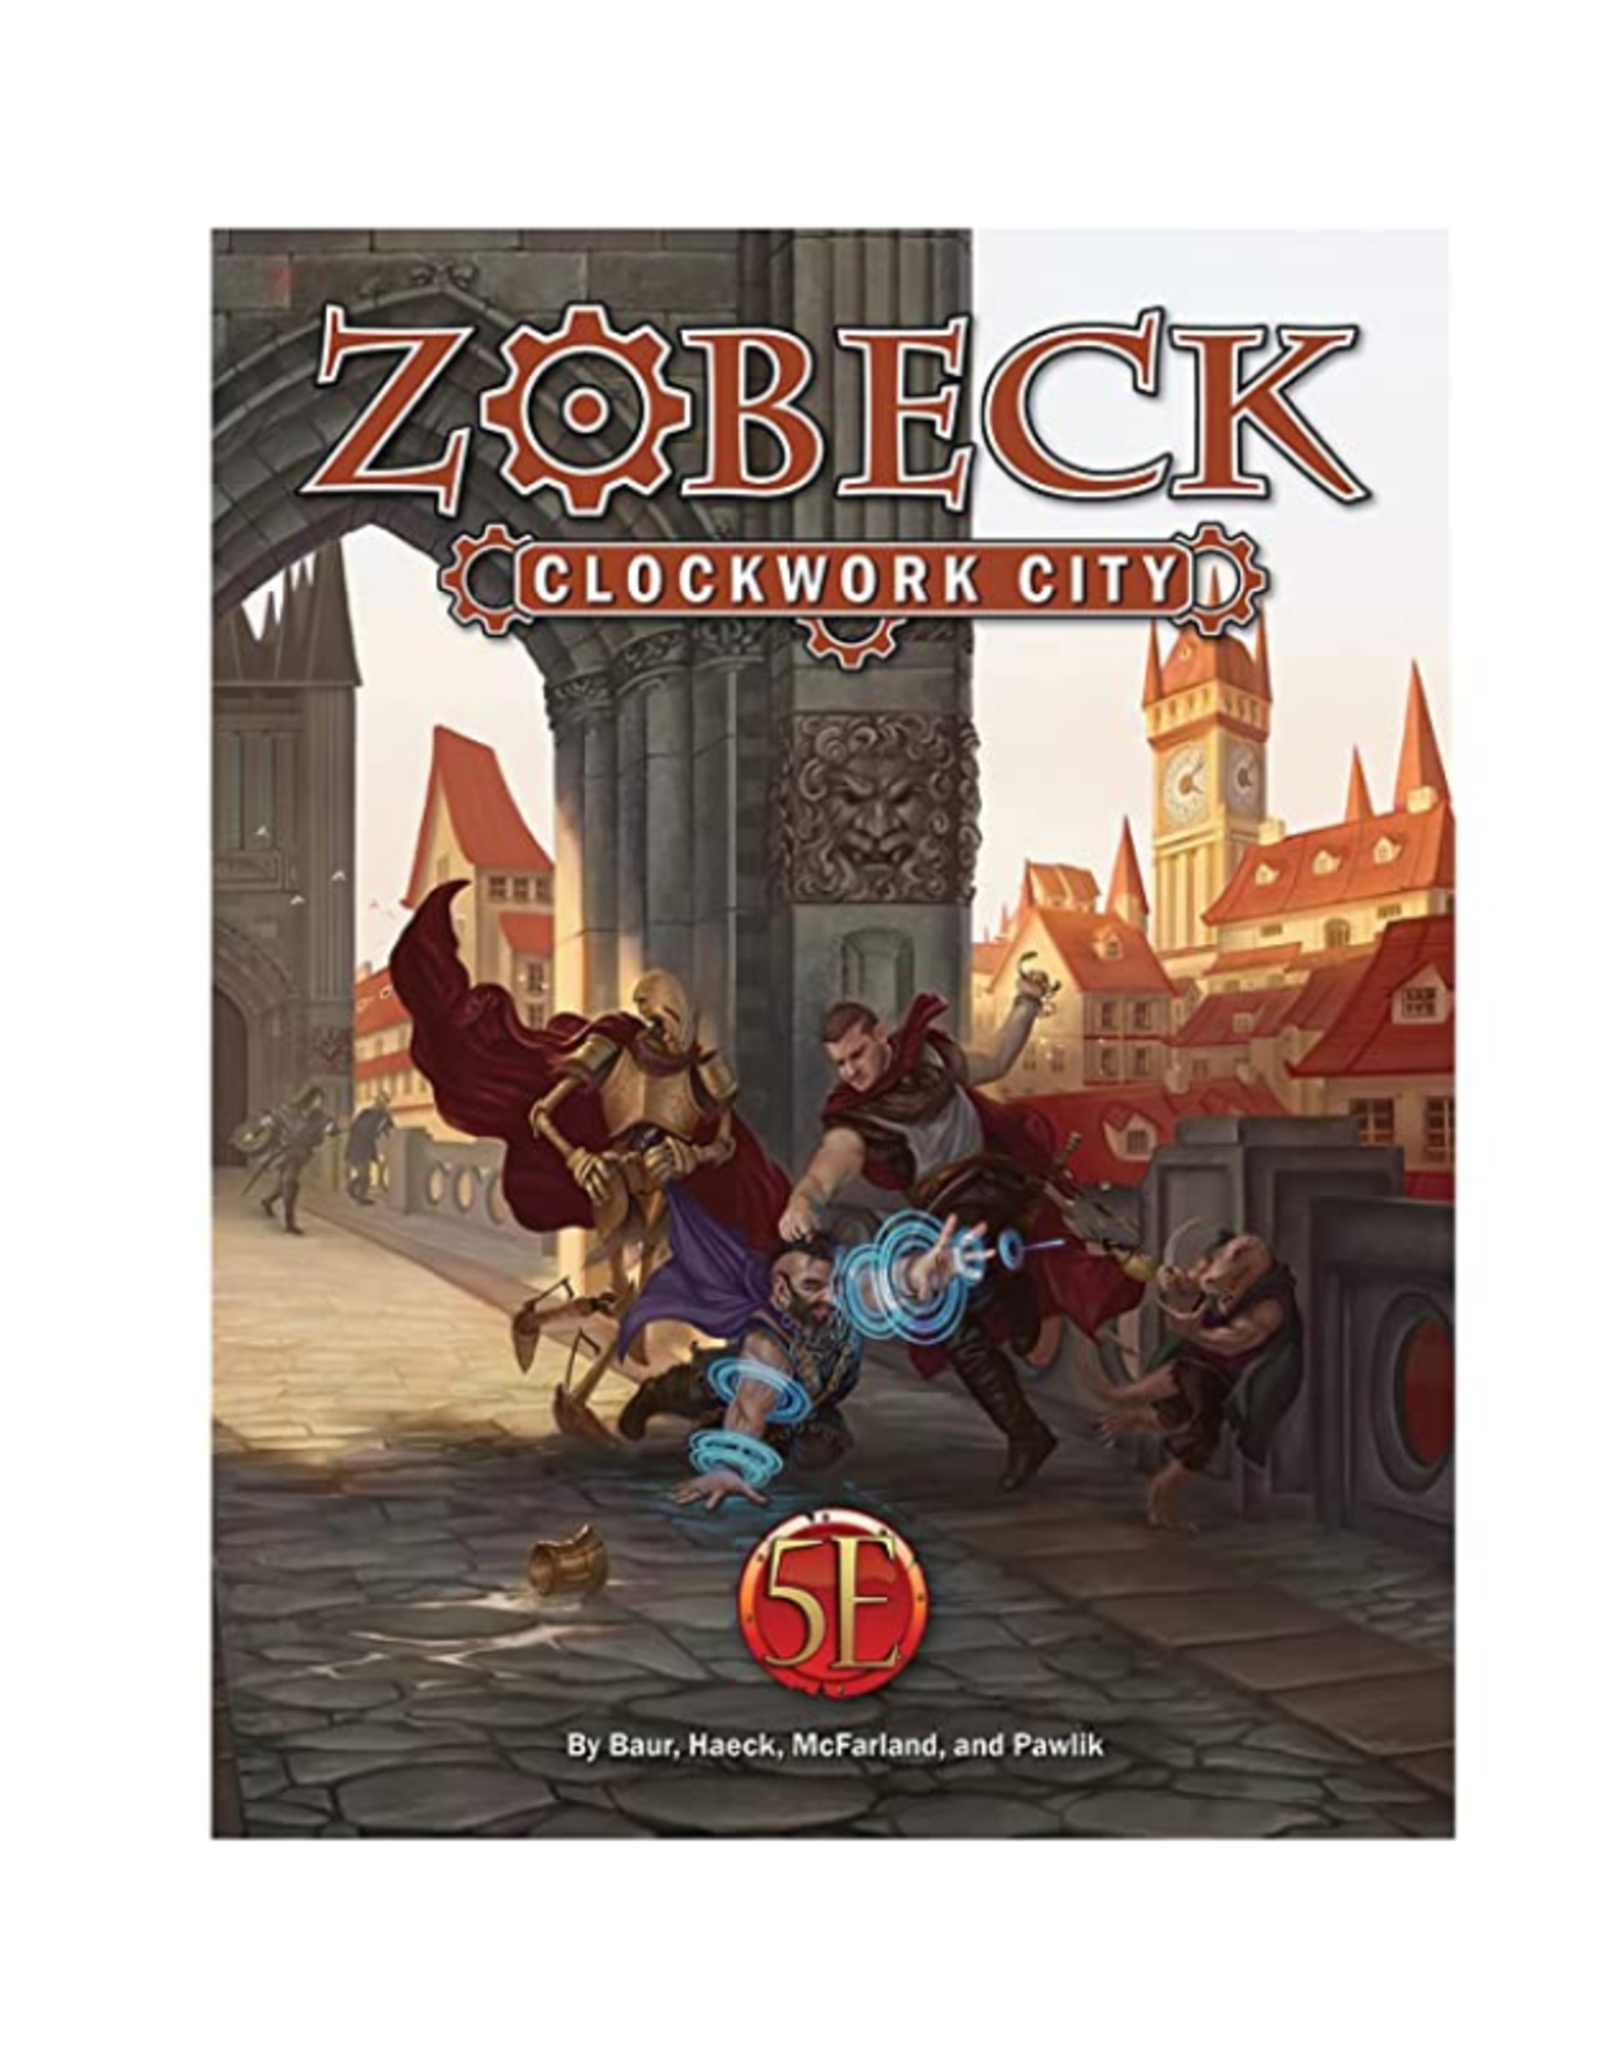 Zobeck the Clockwork City